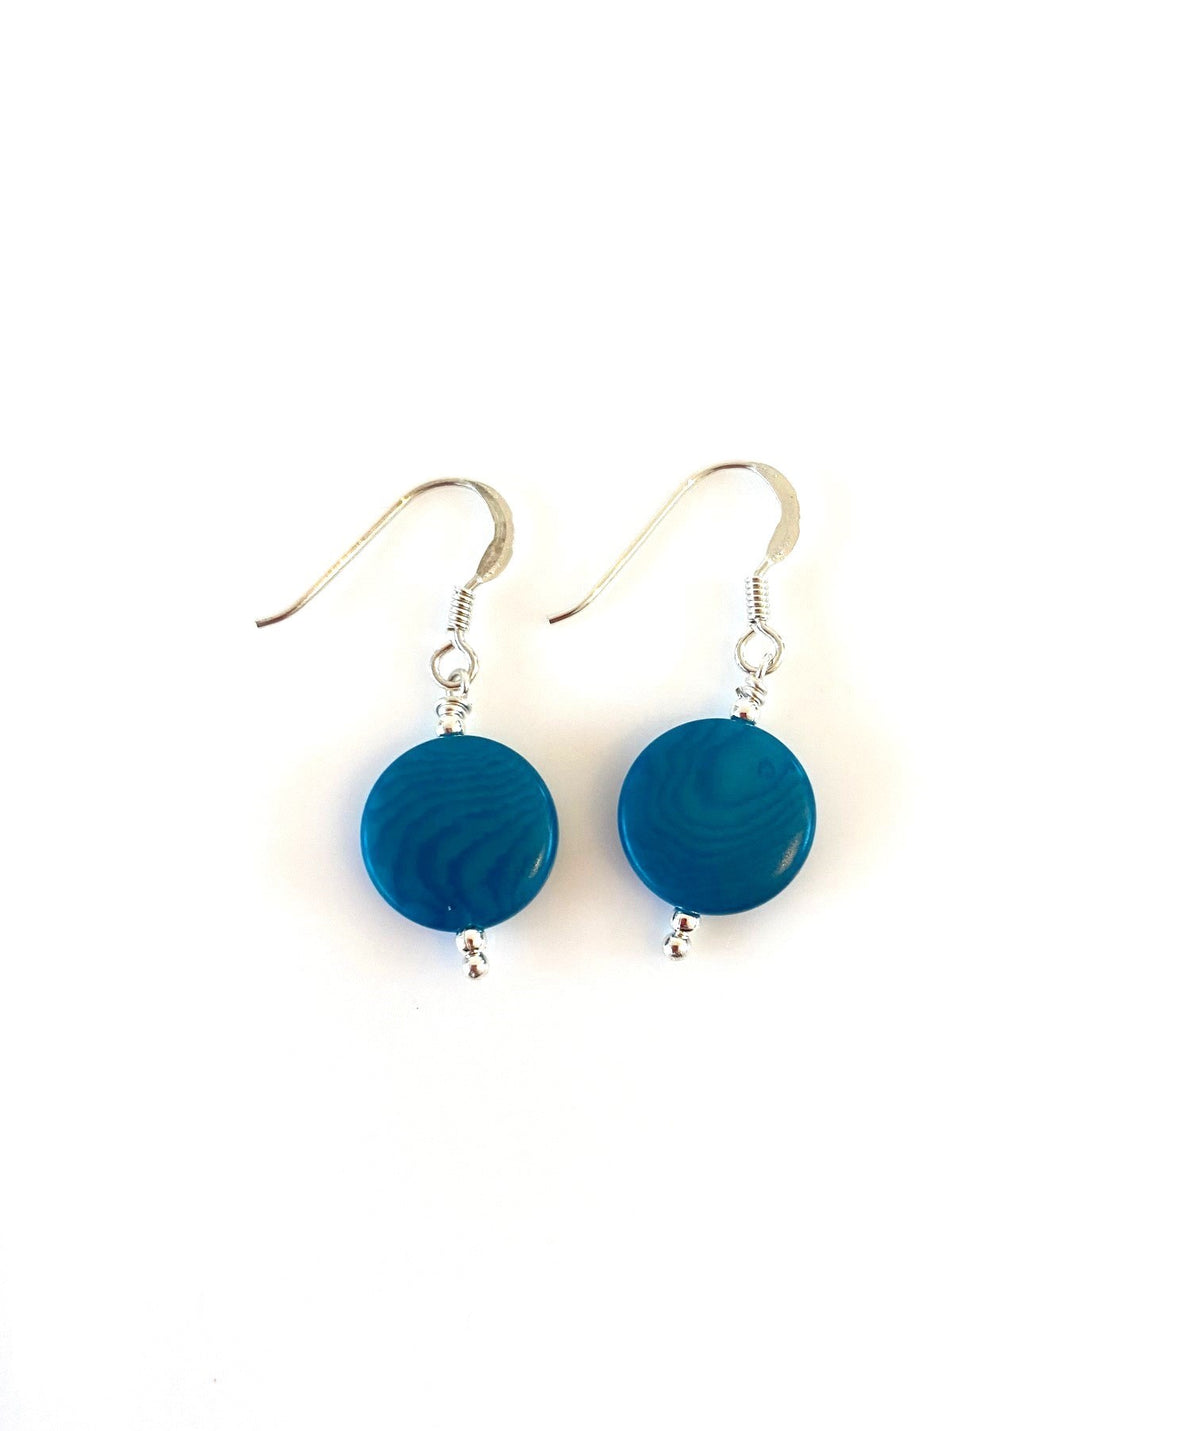 Andrea earrings - turquoise